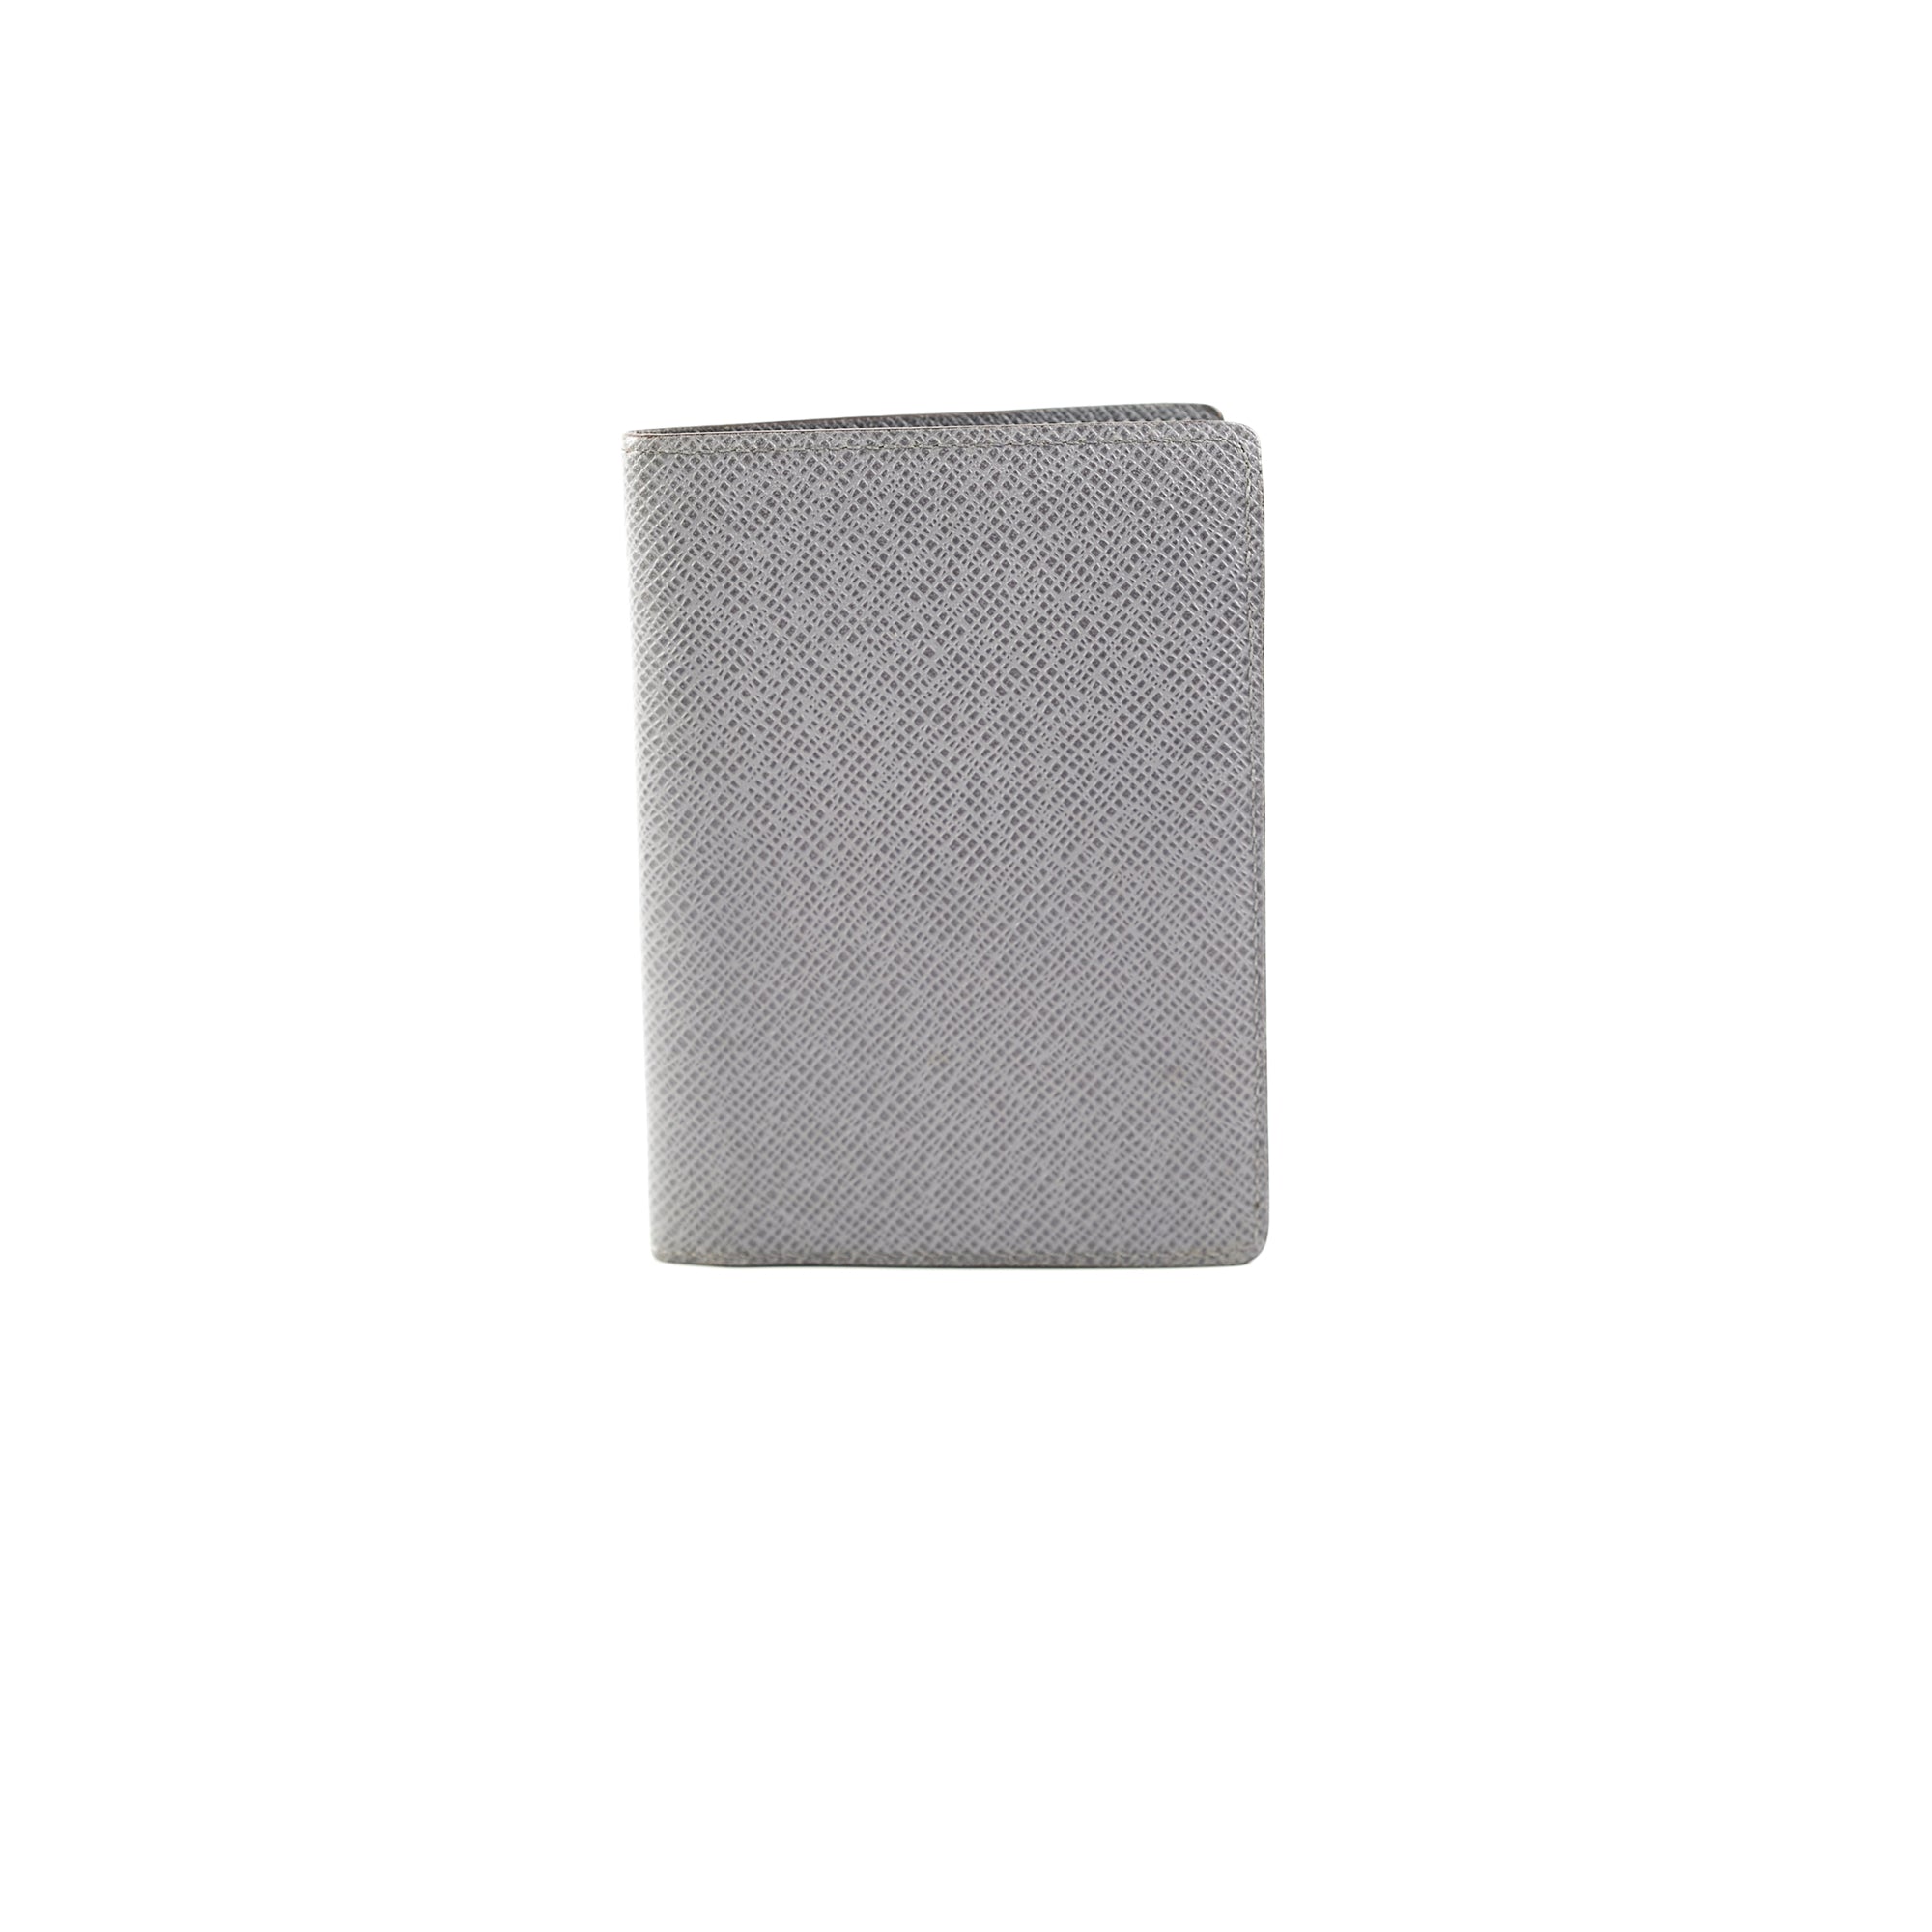 Louis Vuitton Pocket Organizer, Grey, One Size